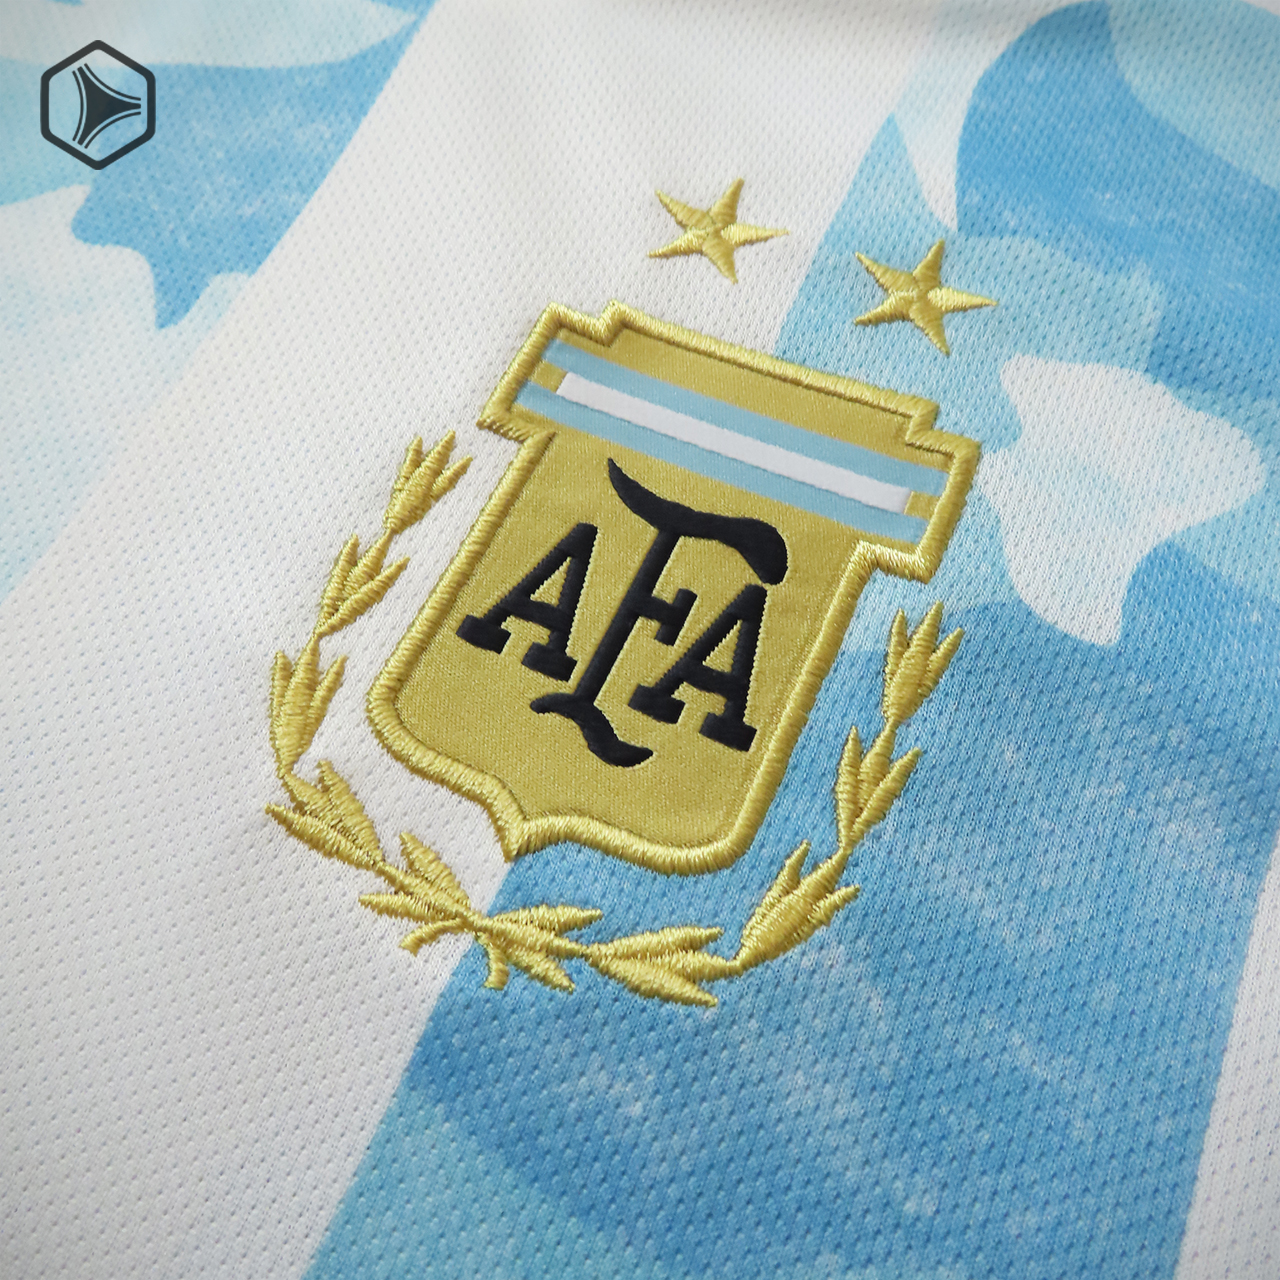 Camiseta adidas de Argentina Copa América 2021